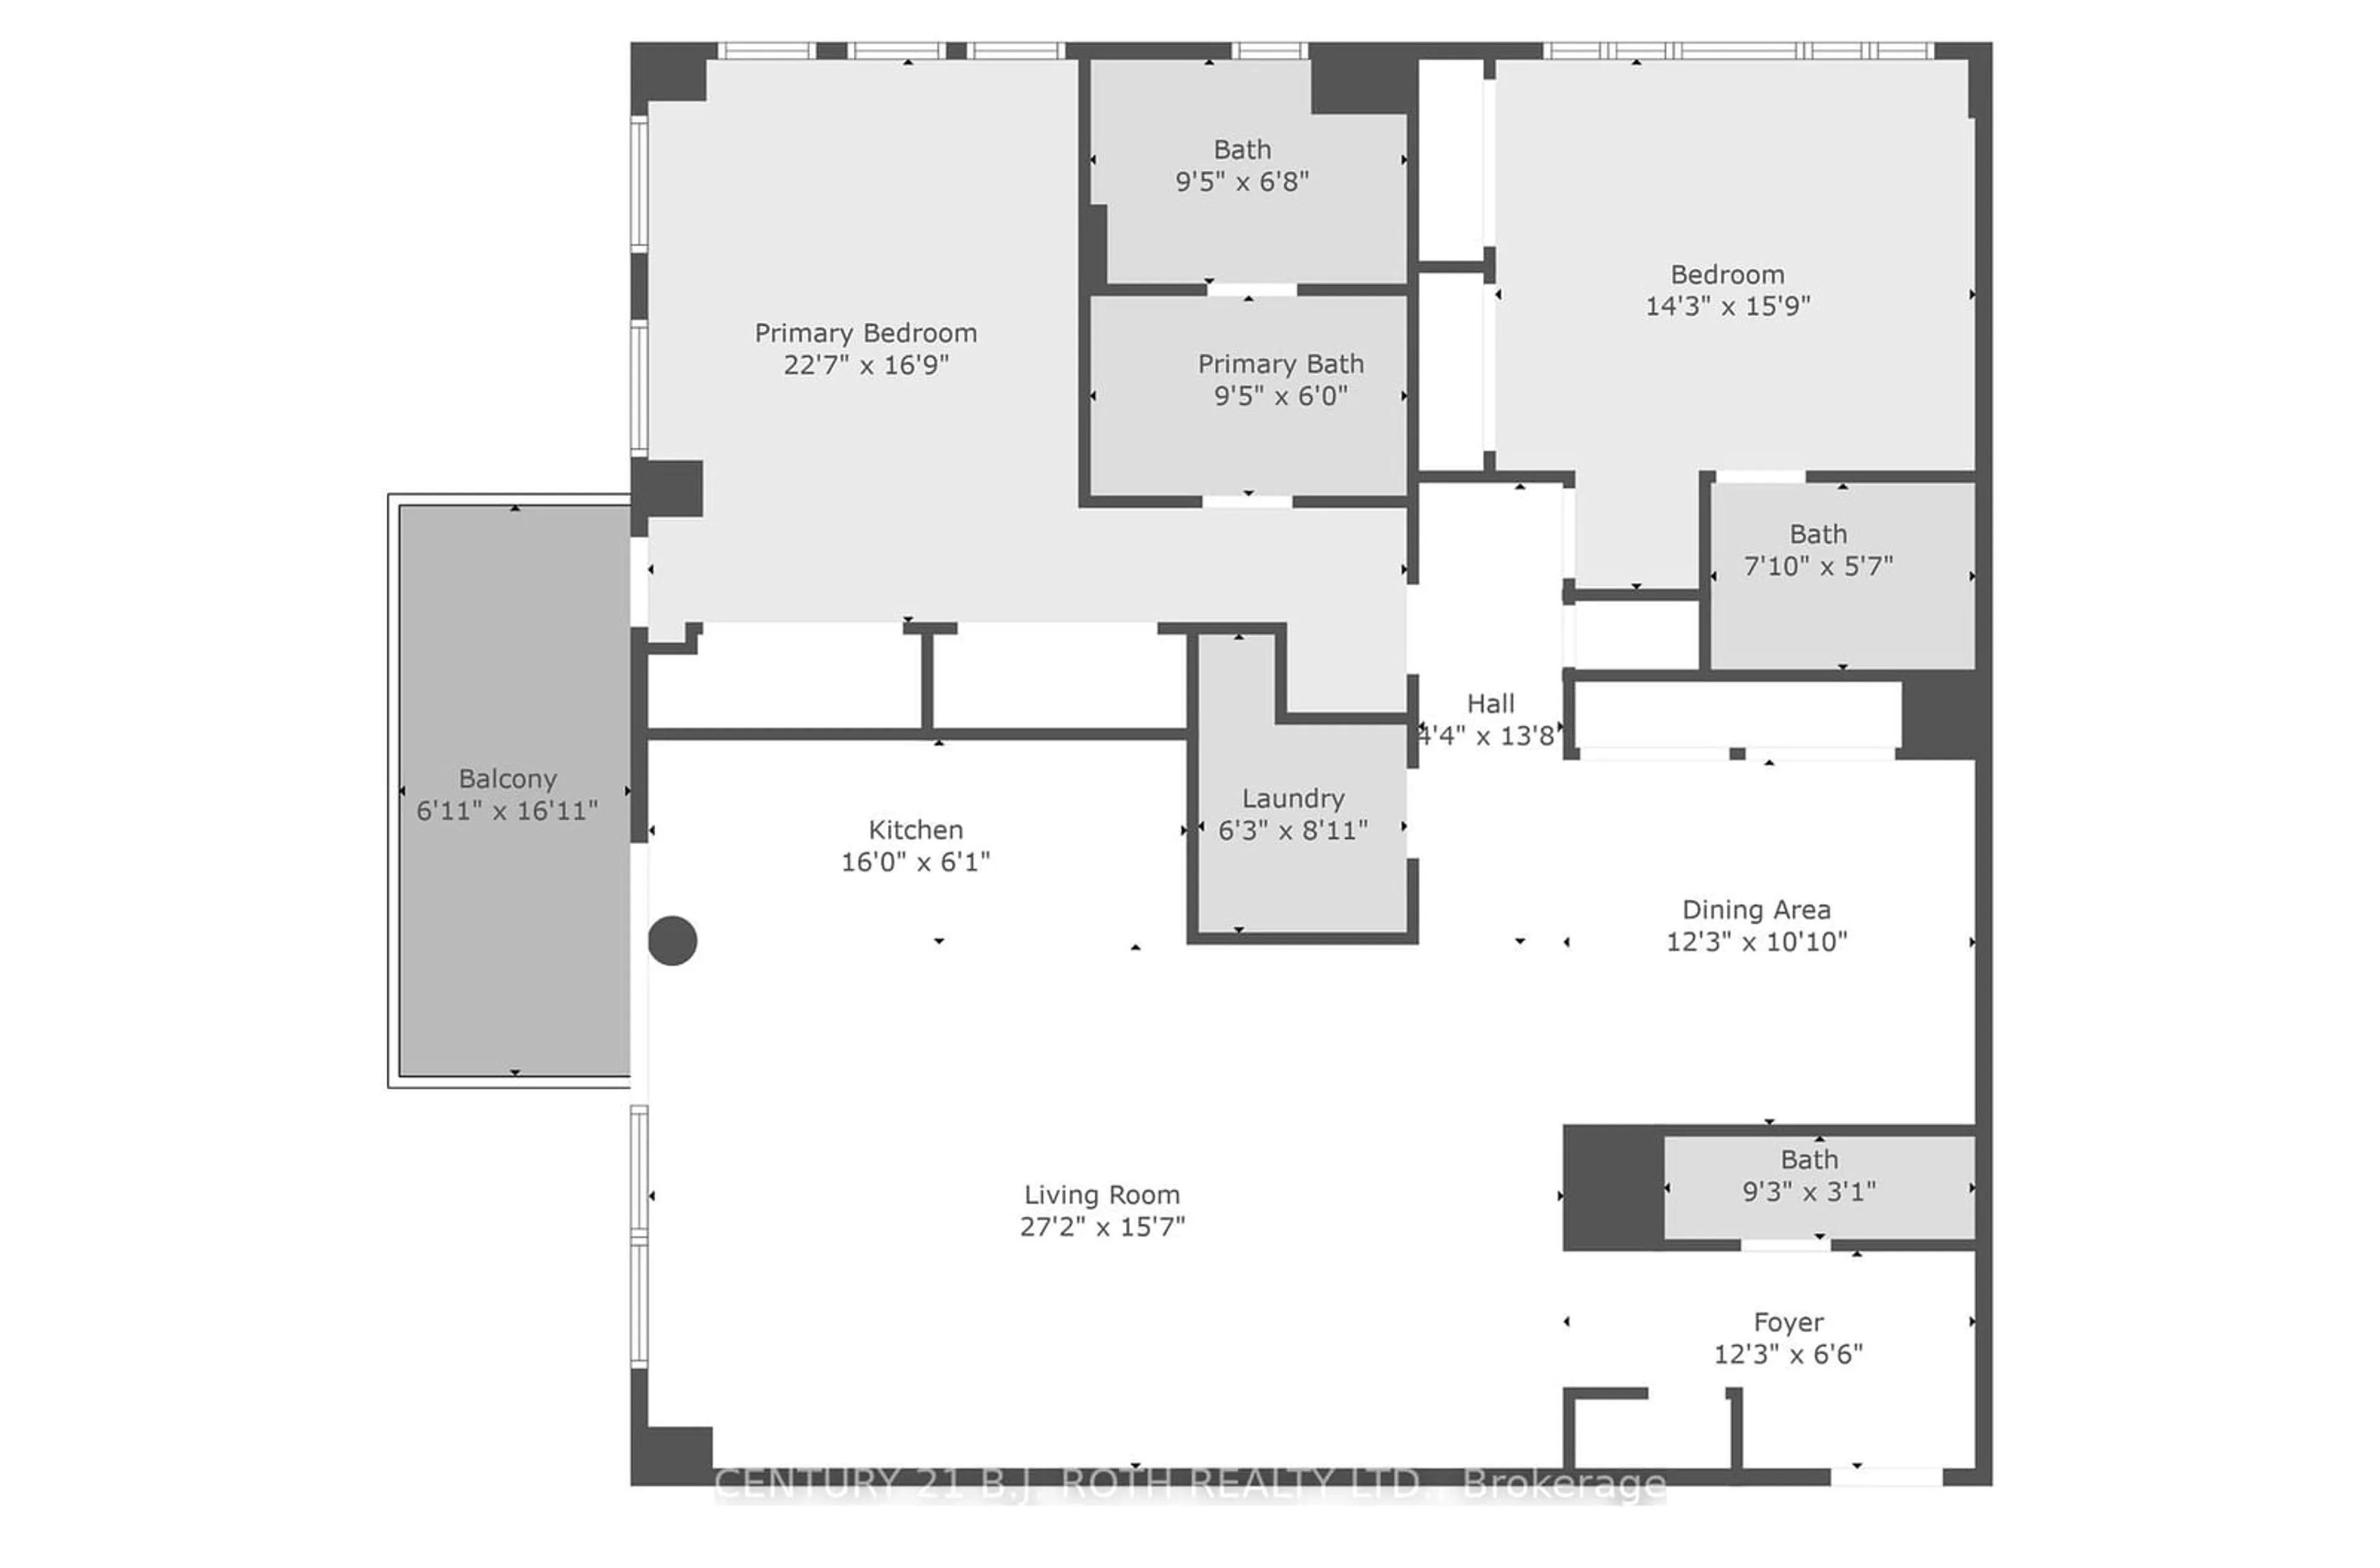 Floor plan for 185 DUNLOP St #523, Barrie Ontario L4M 1B2